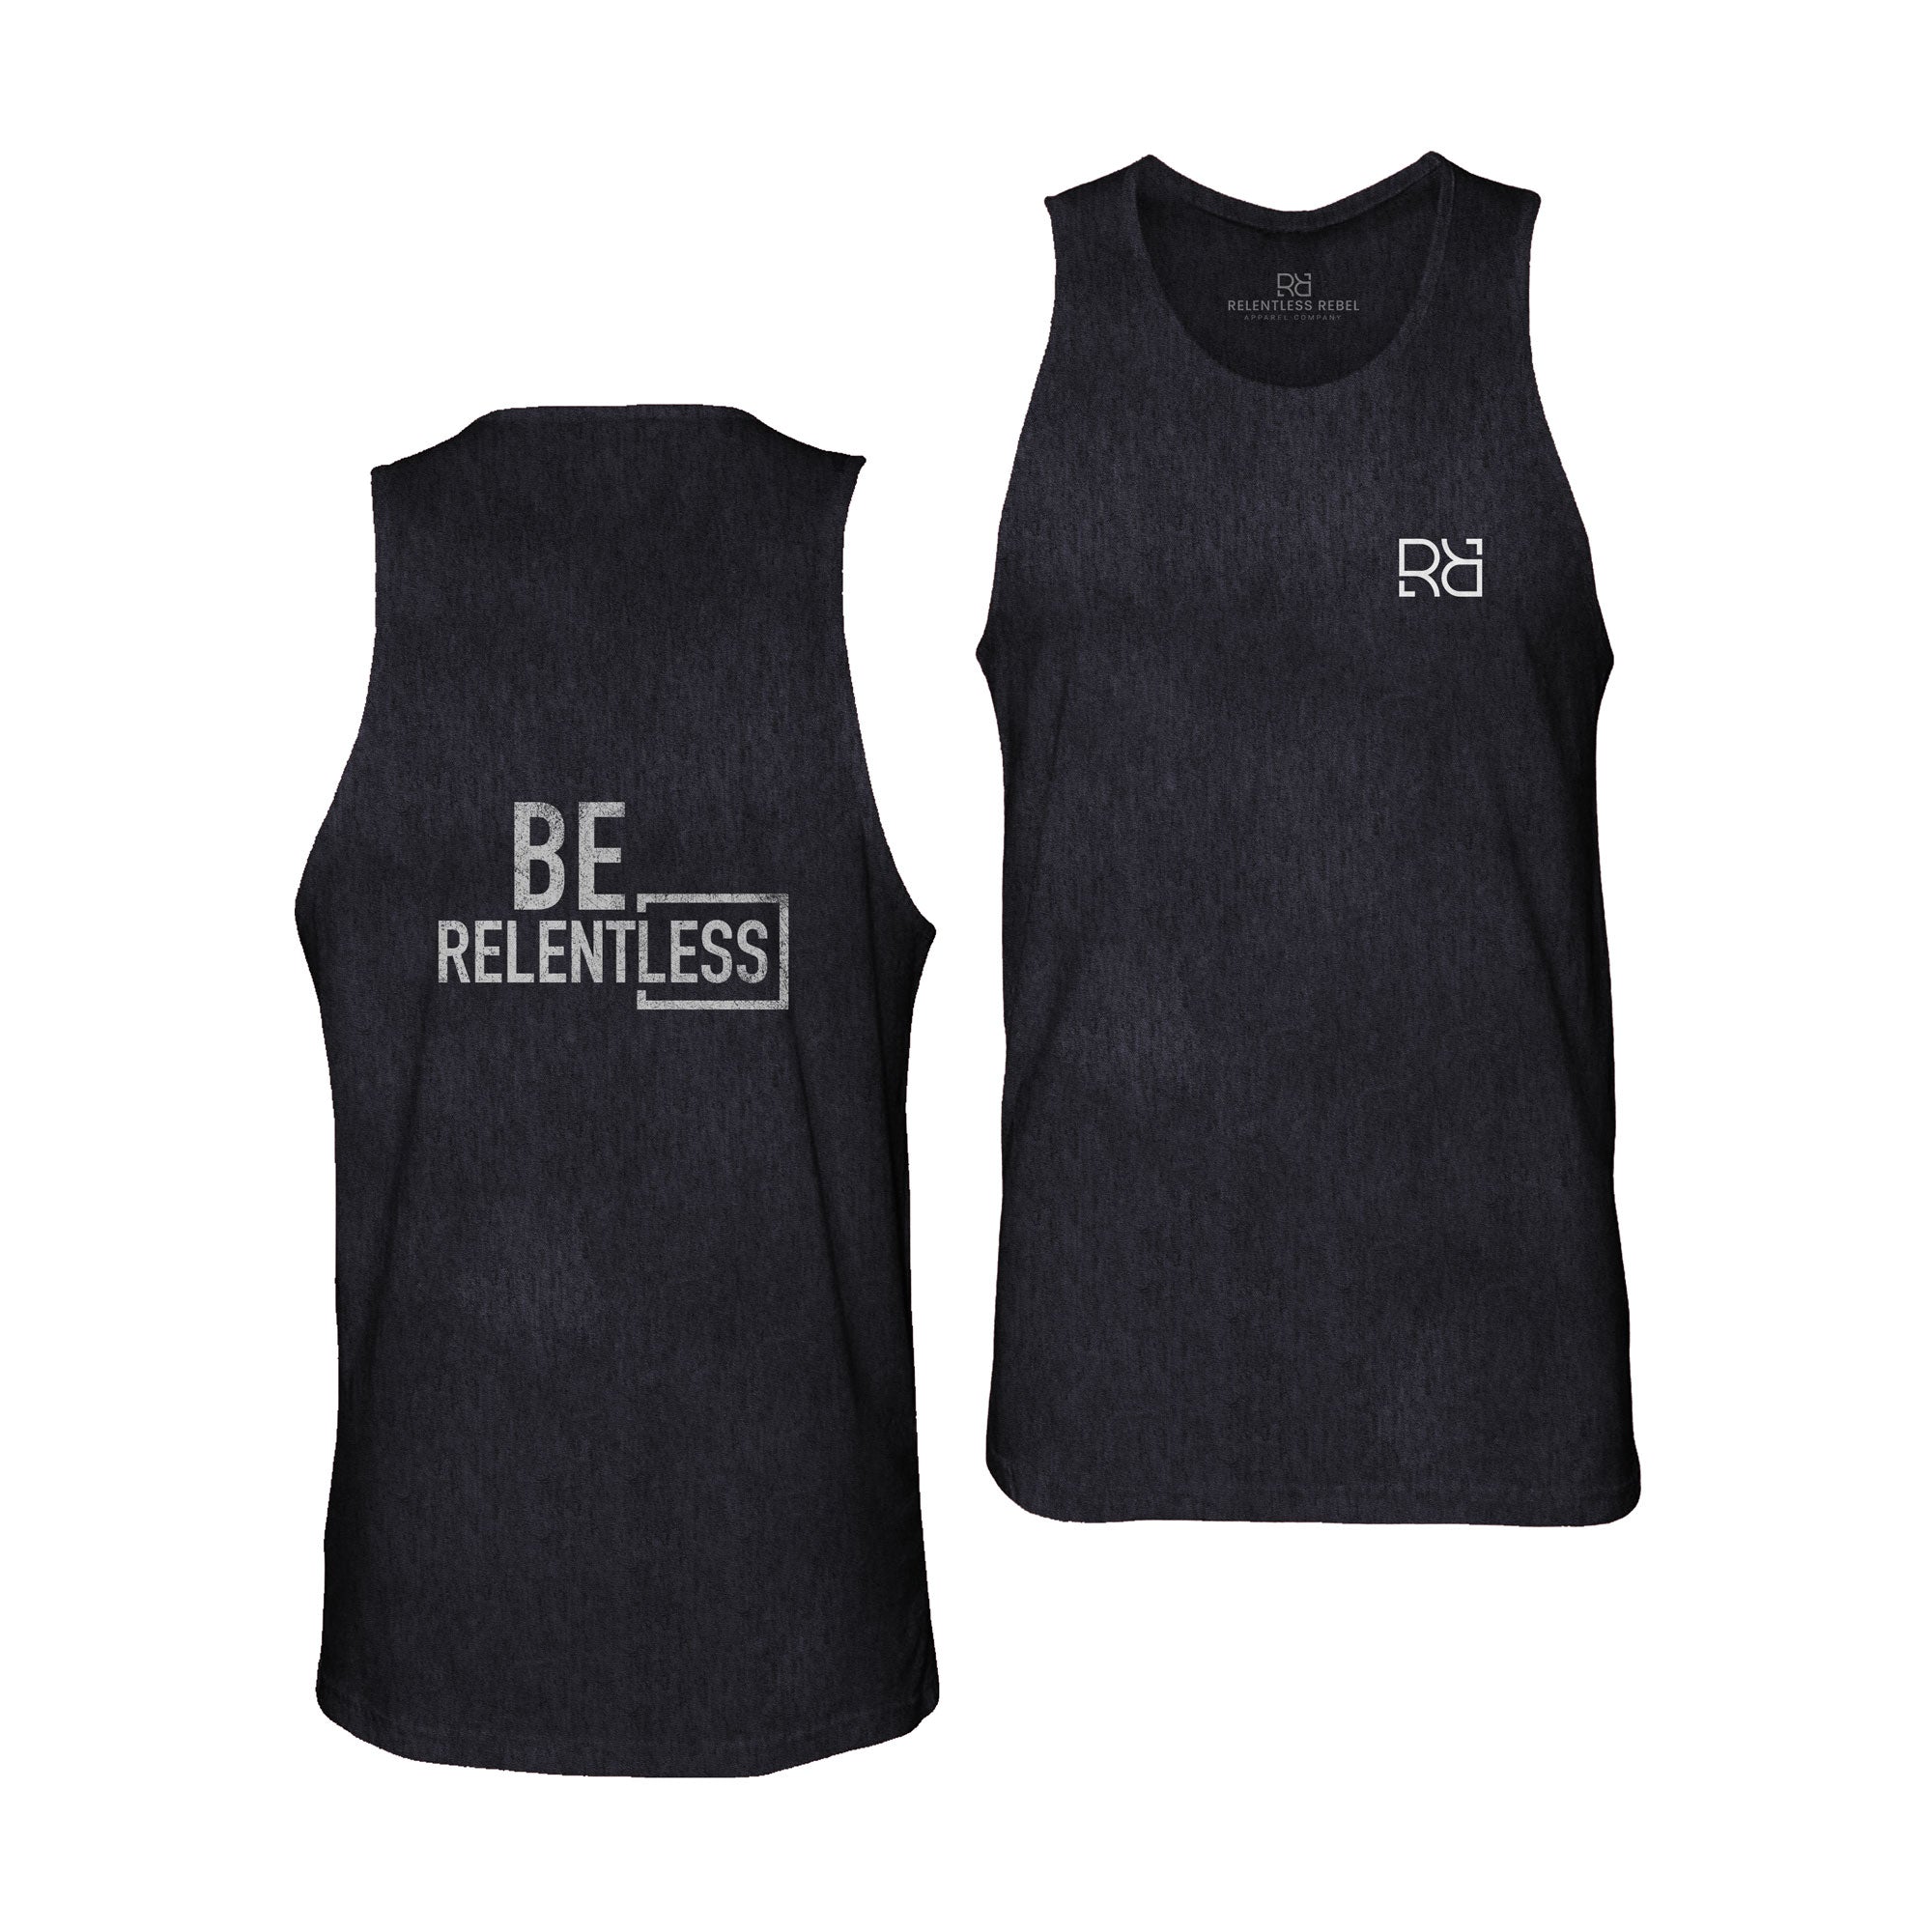 Be Relentless black tank top